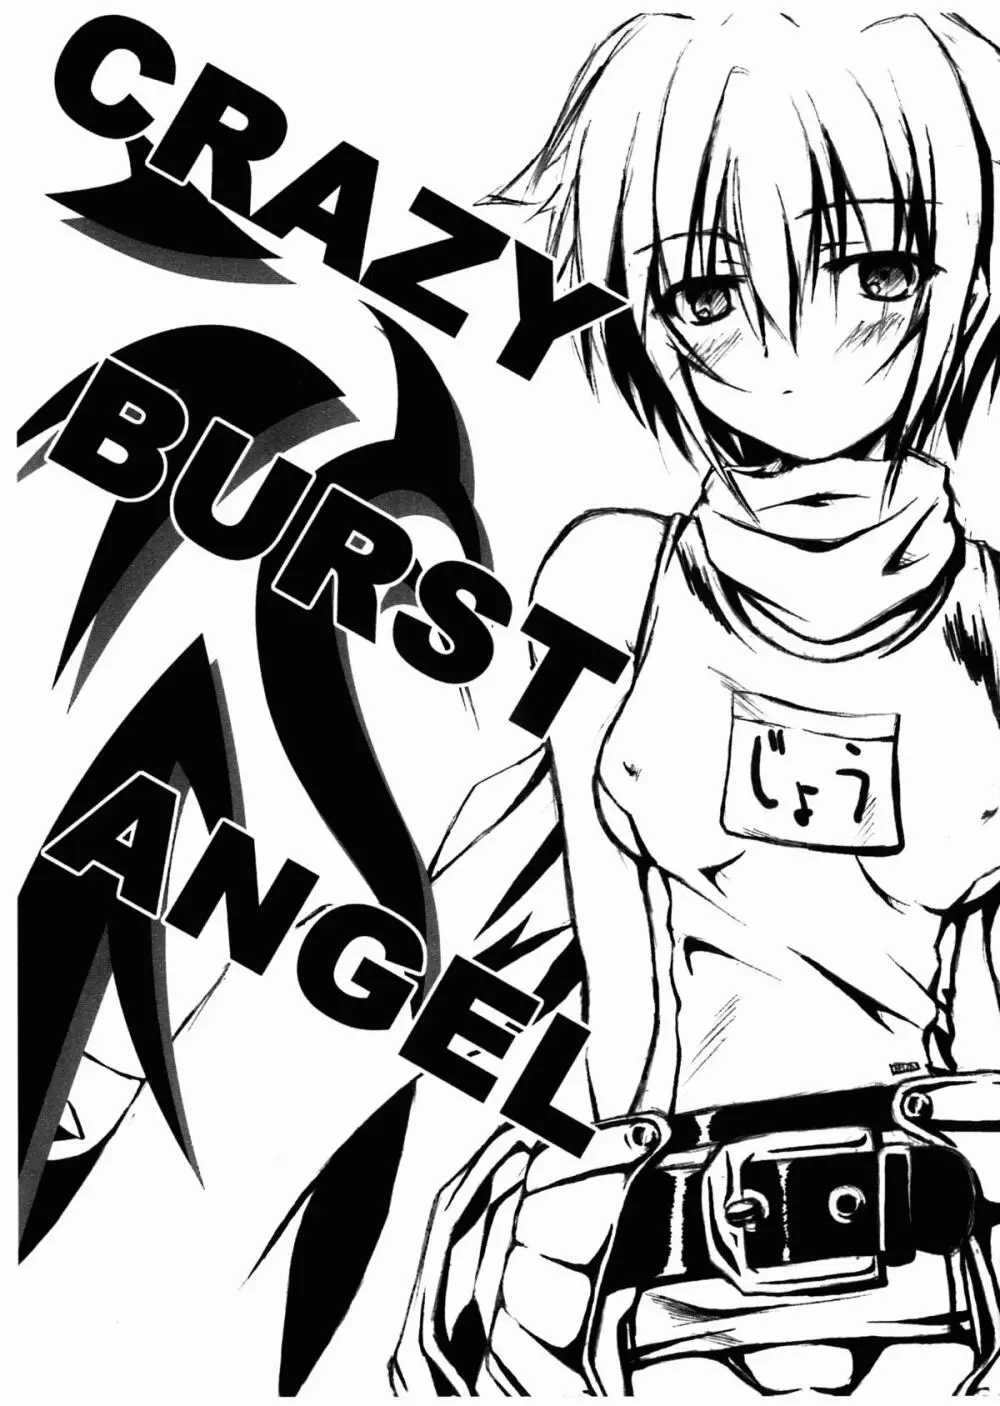 CRAZY BURST ANGEL - page1